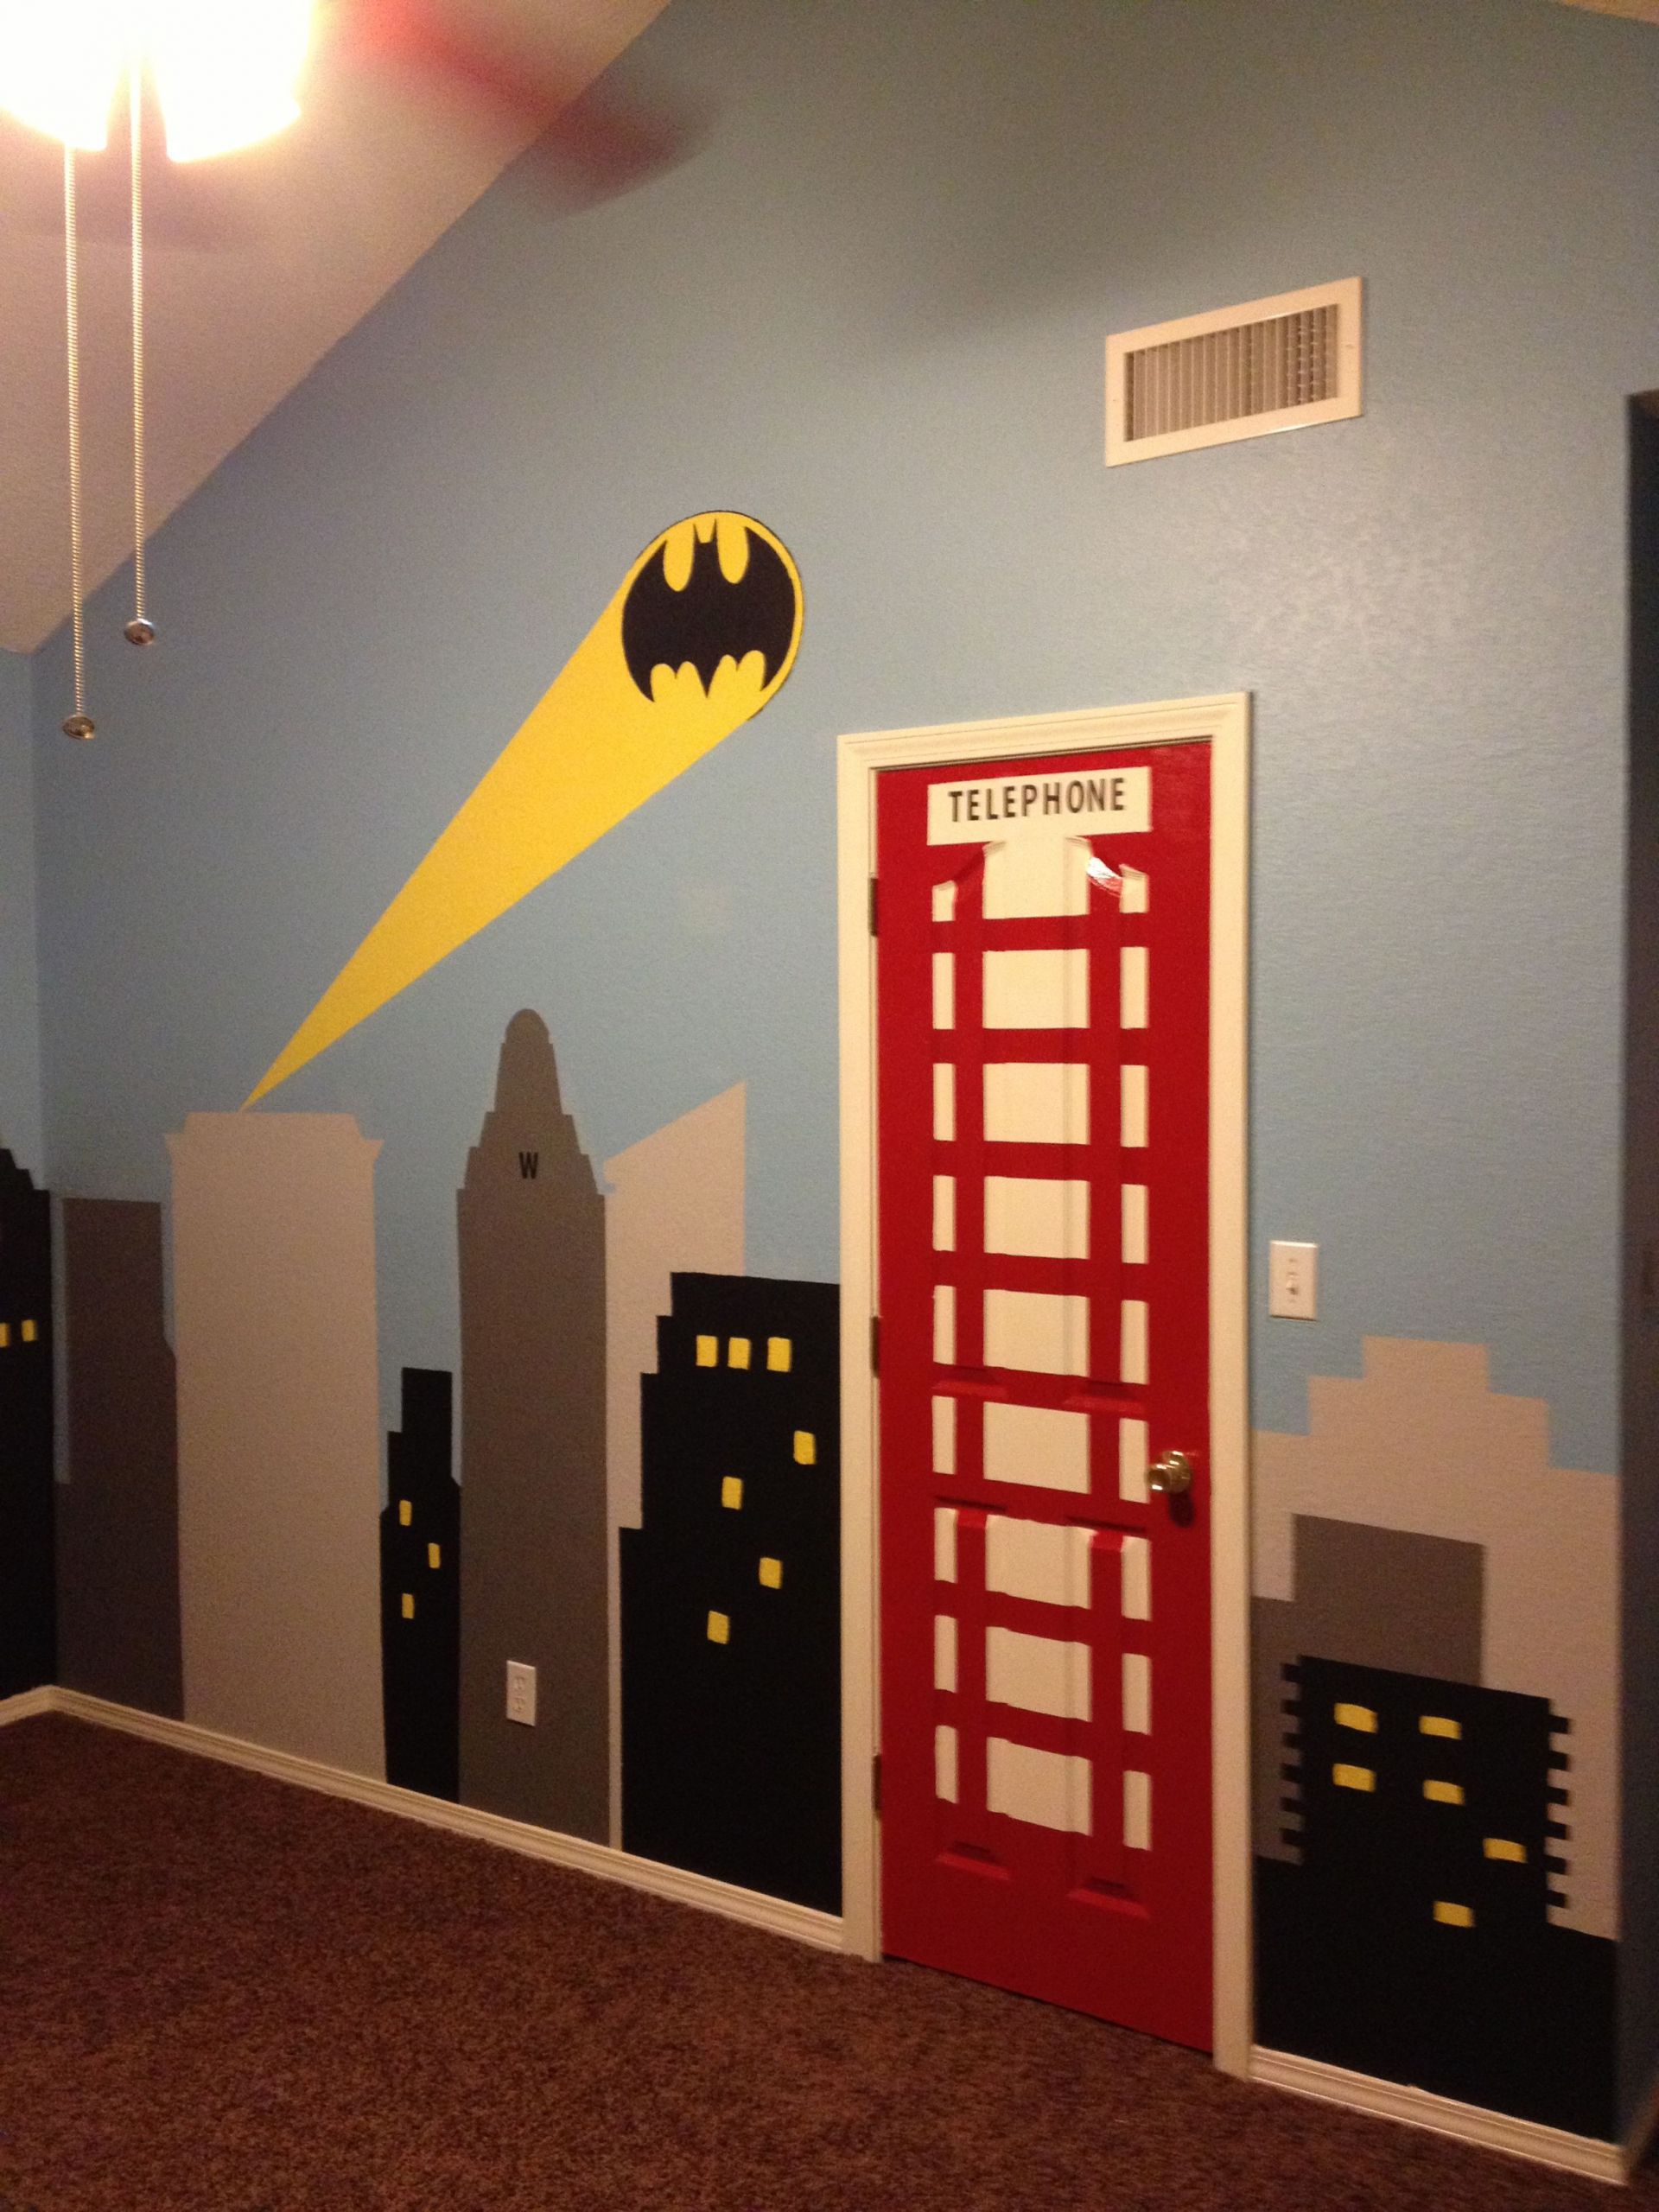 Superheroes Bedroom Decor
 My sons new superhero room with Batman light signal